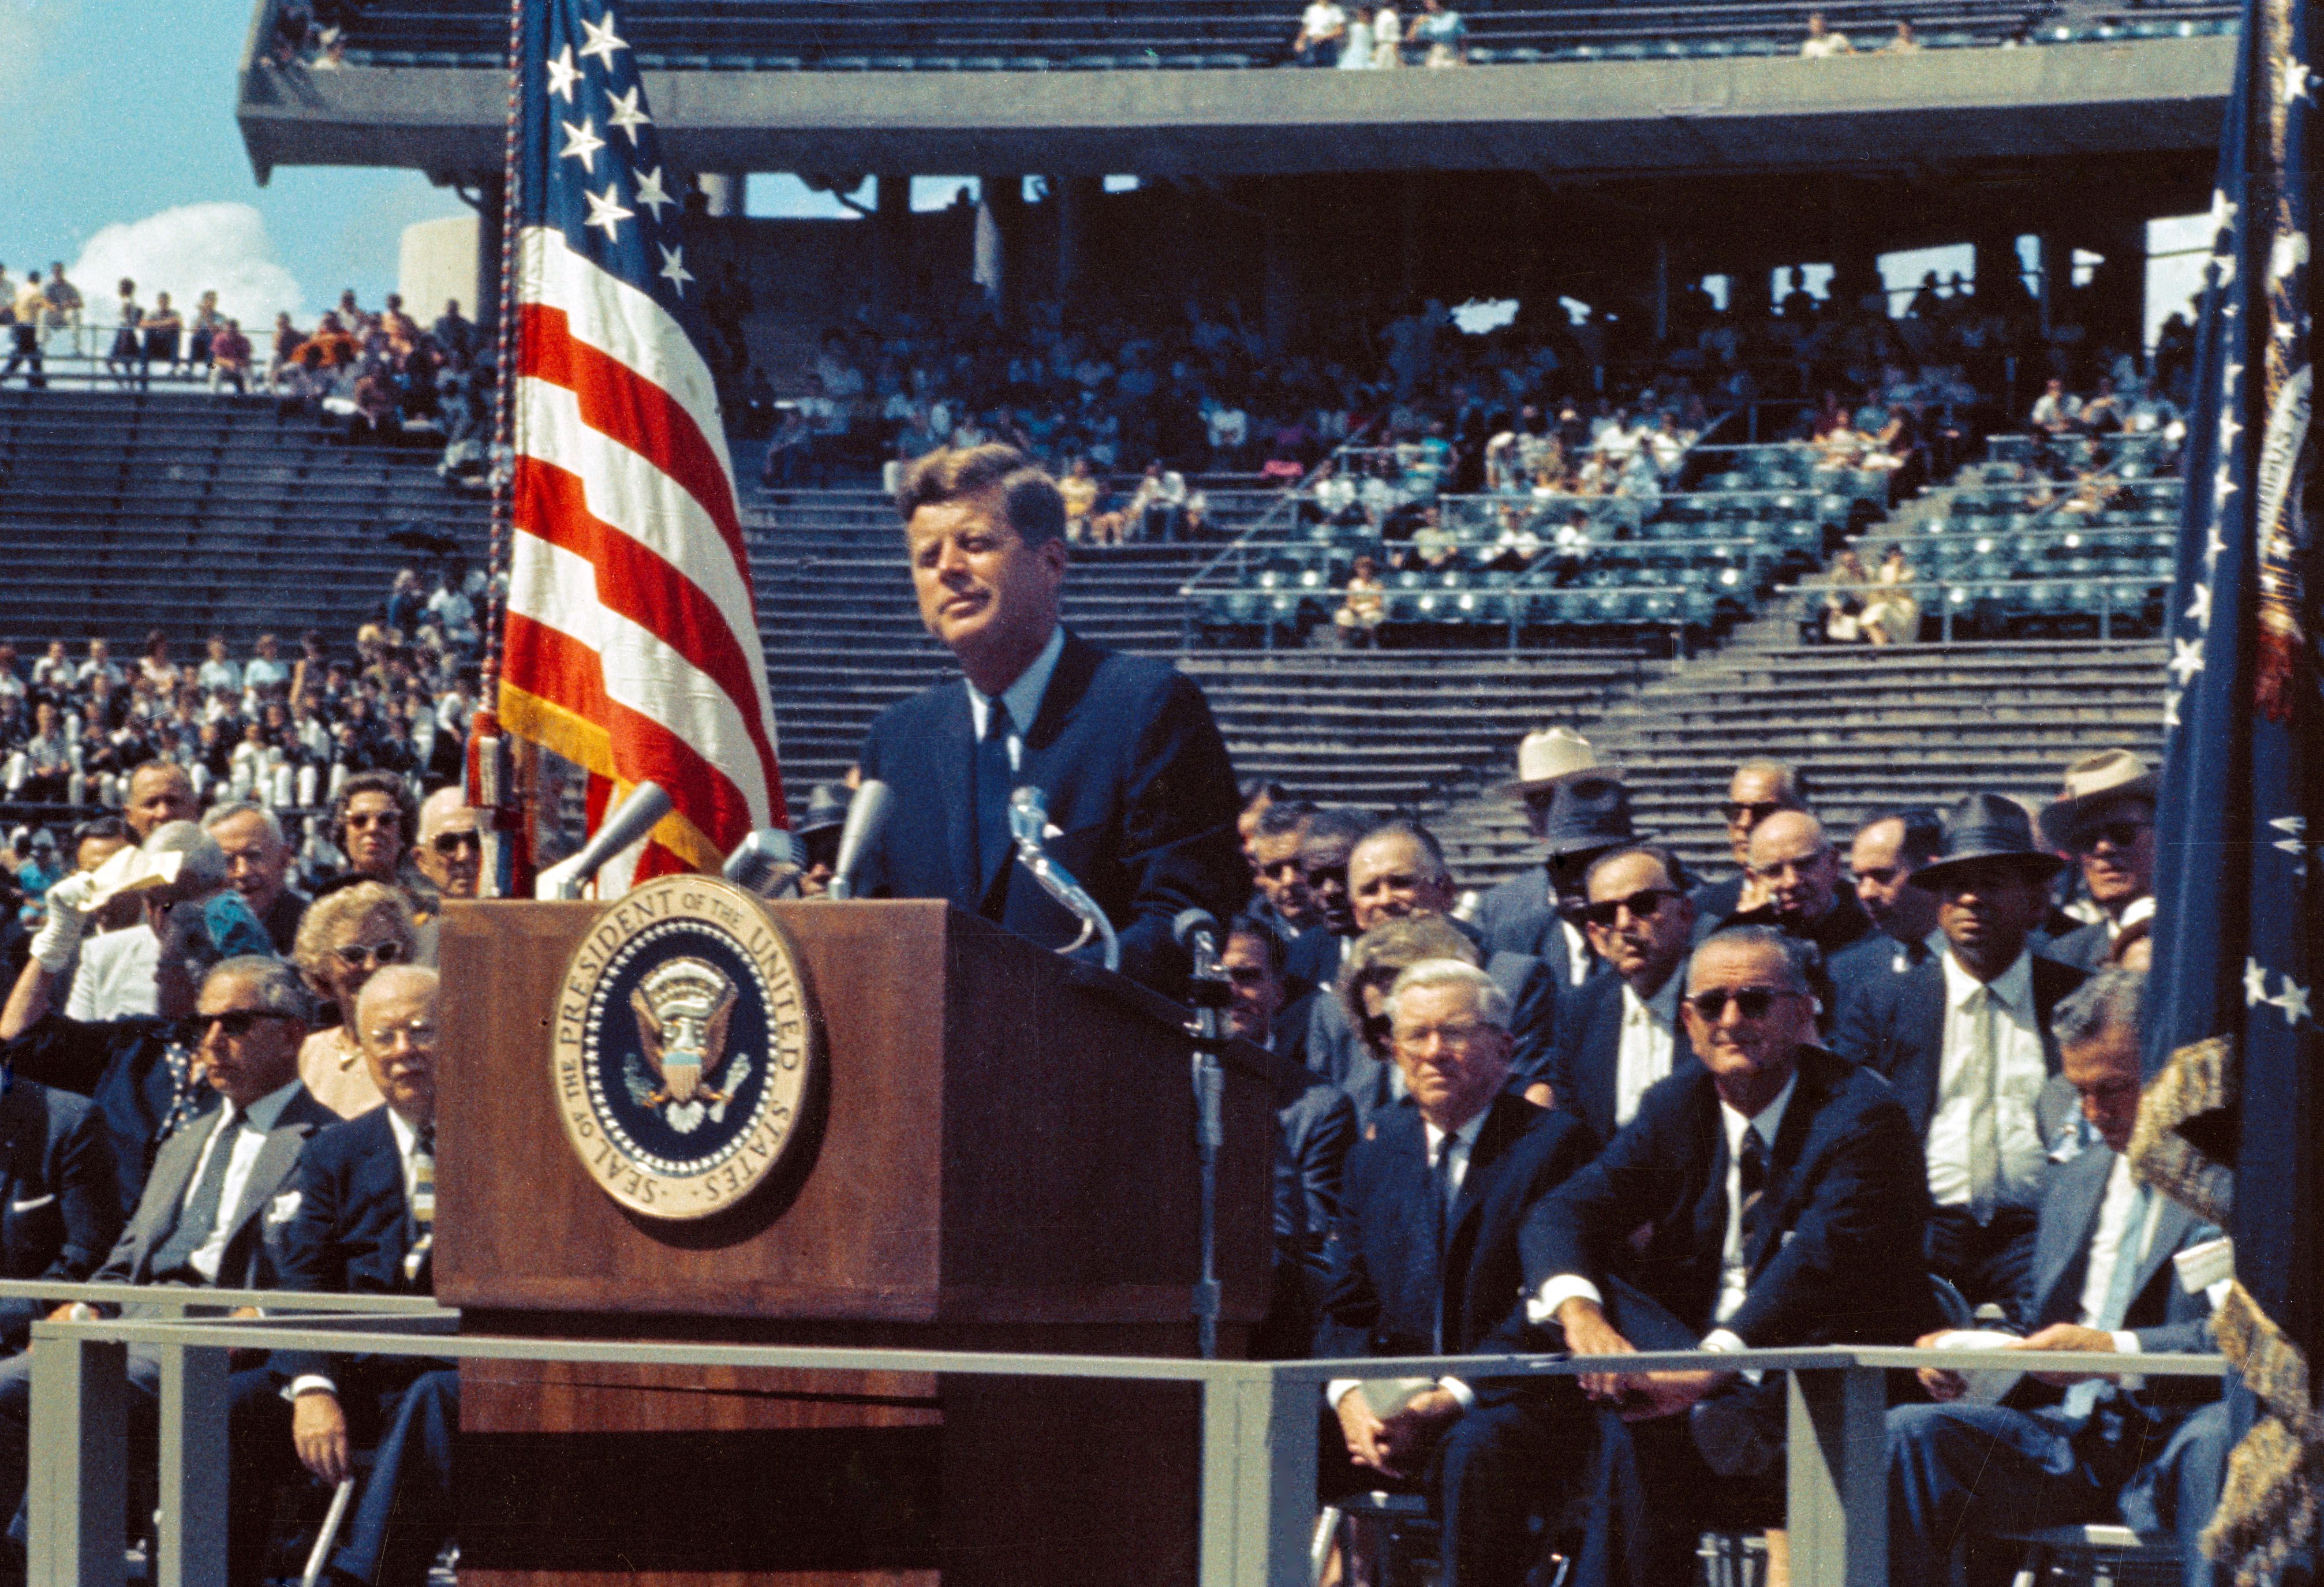 Photo of JFK in front of podium in a stadium. 